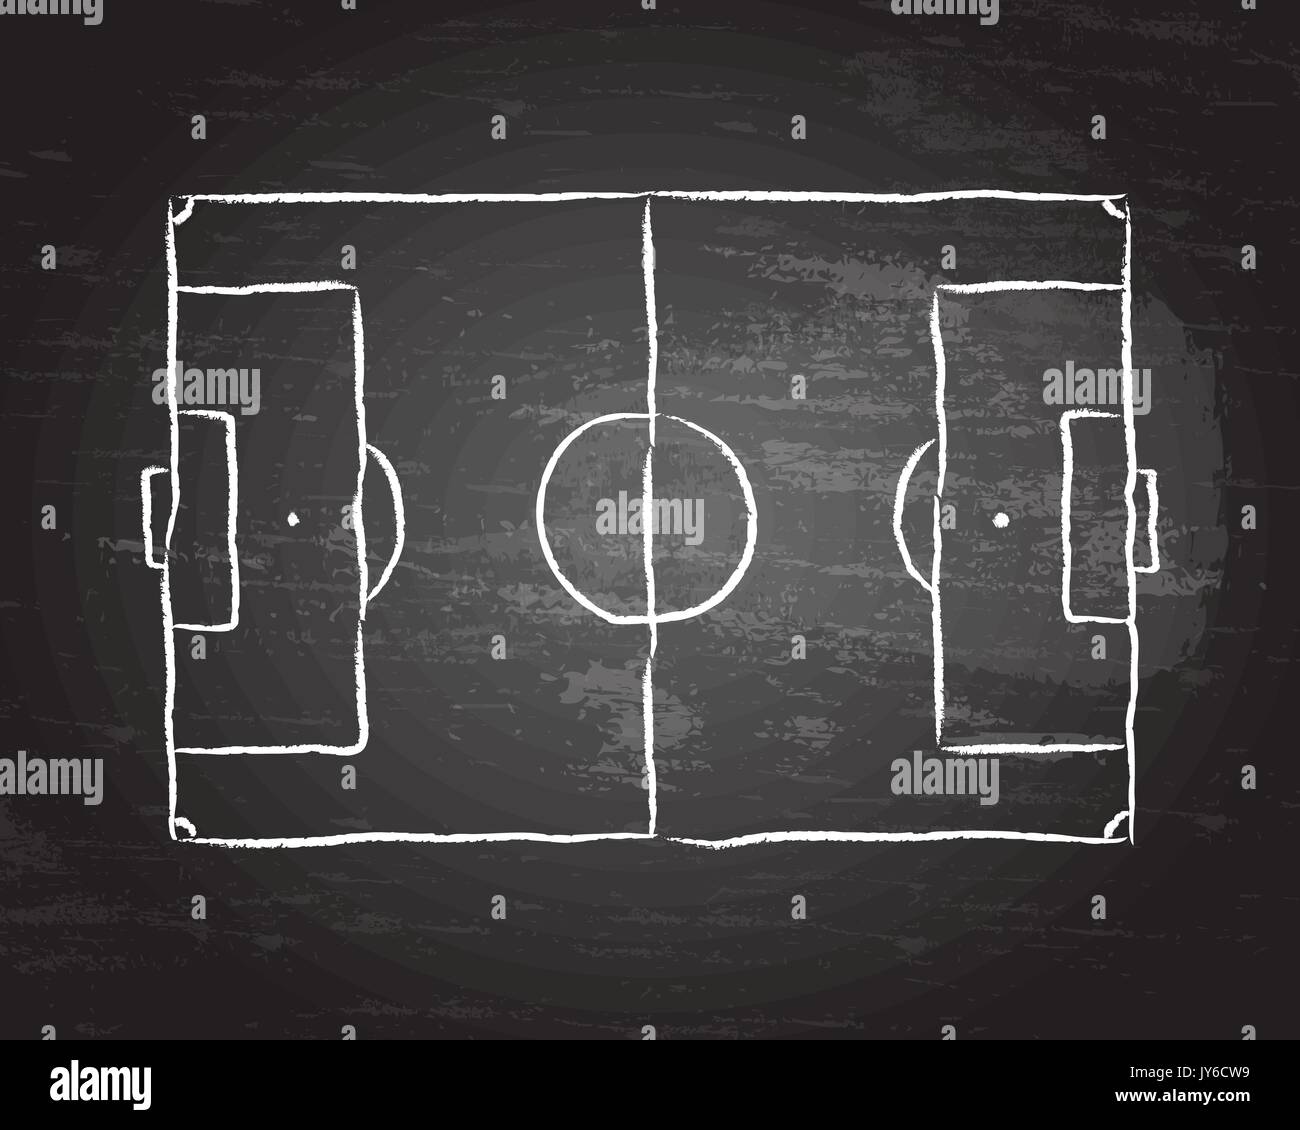 Soccer football pitch diagram on blackboard Stock Vector